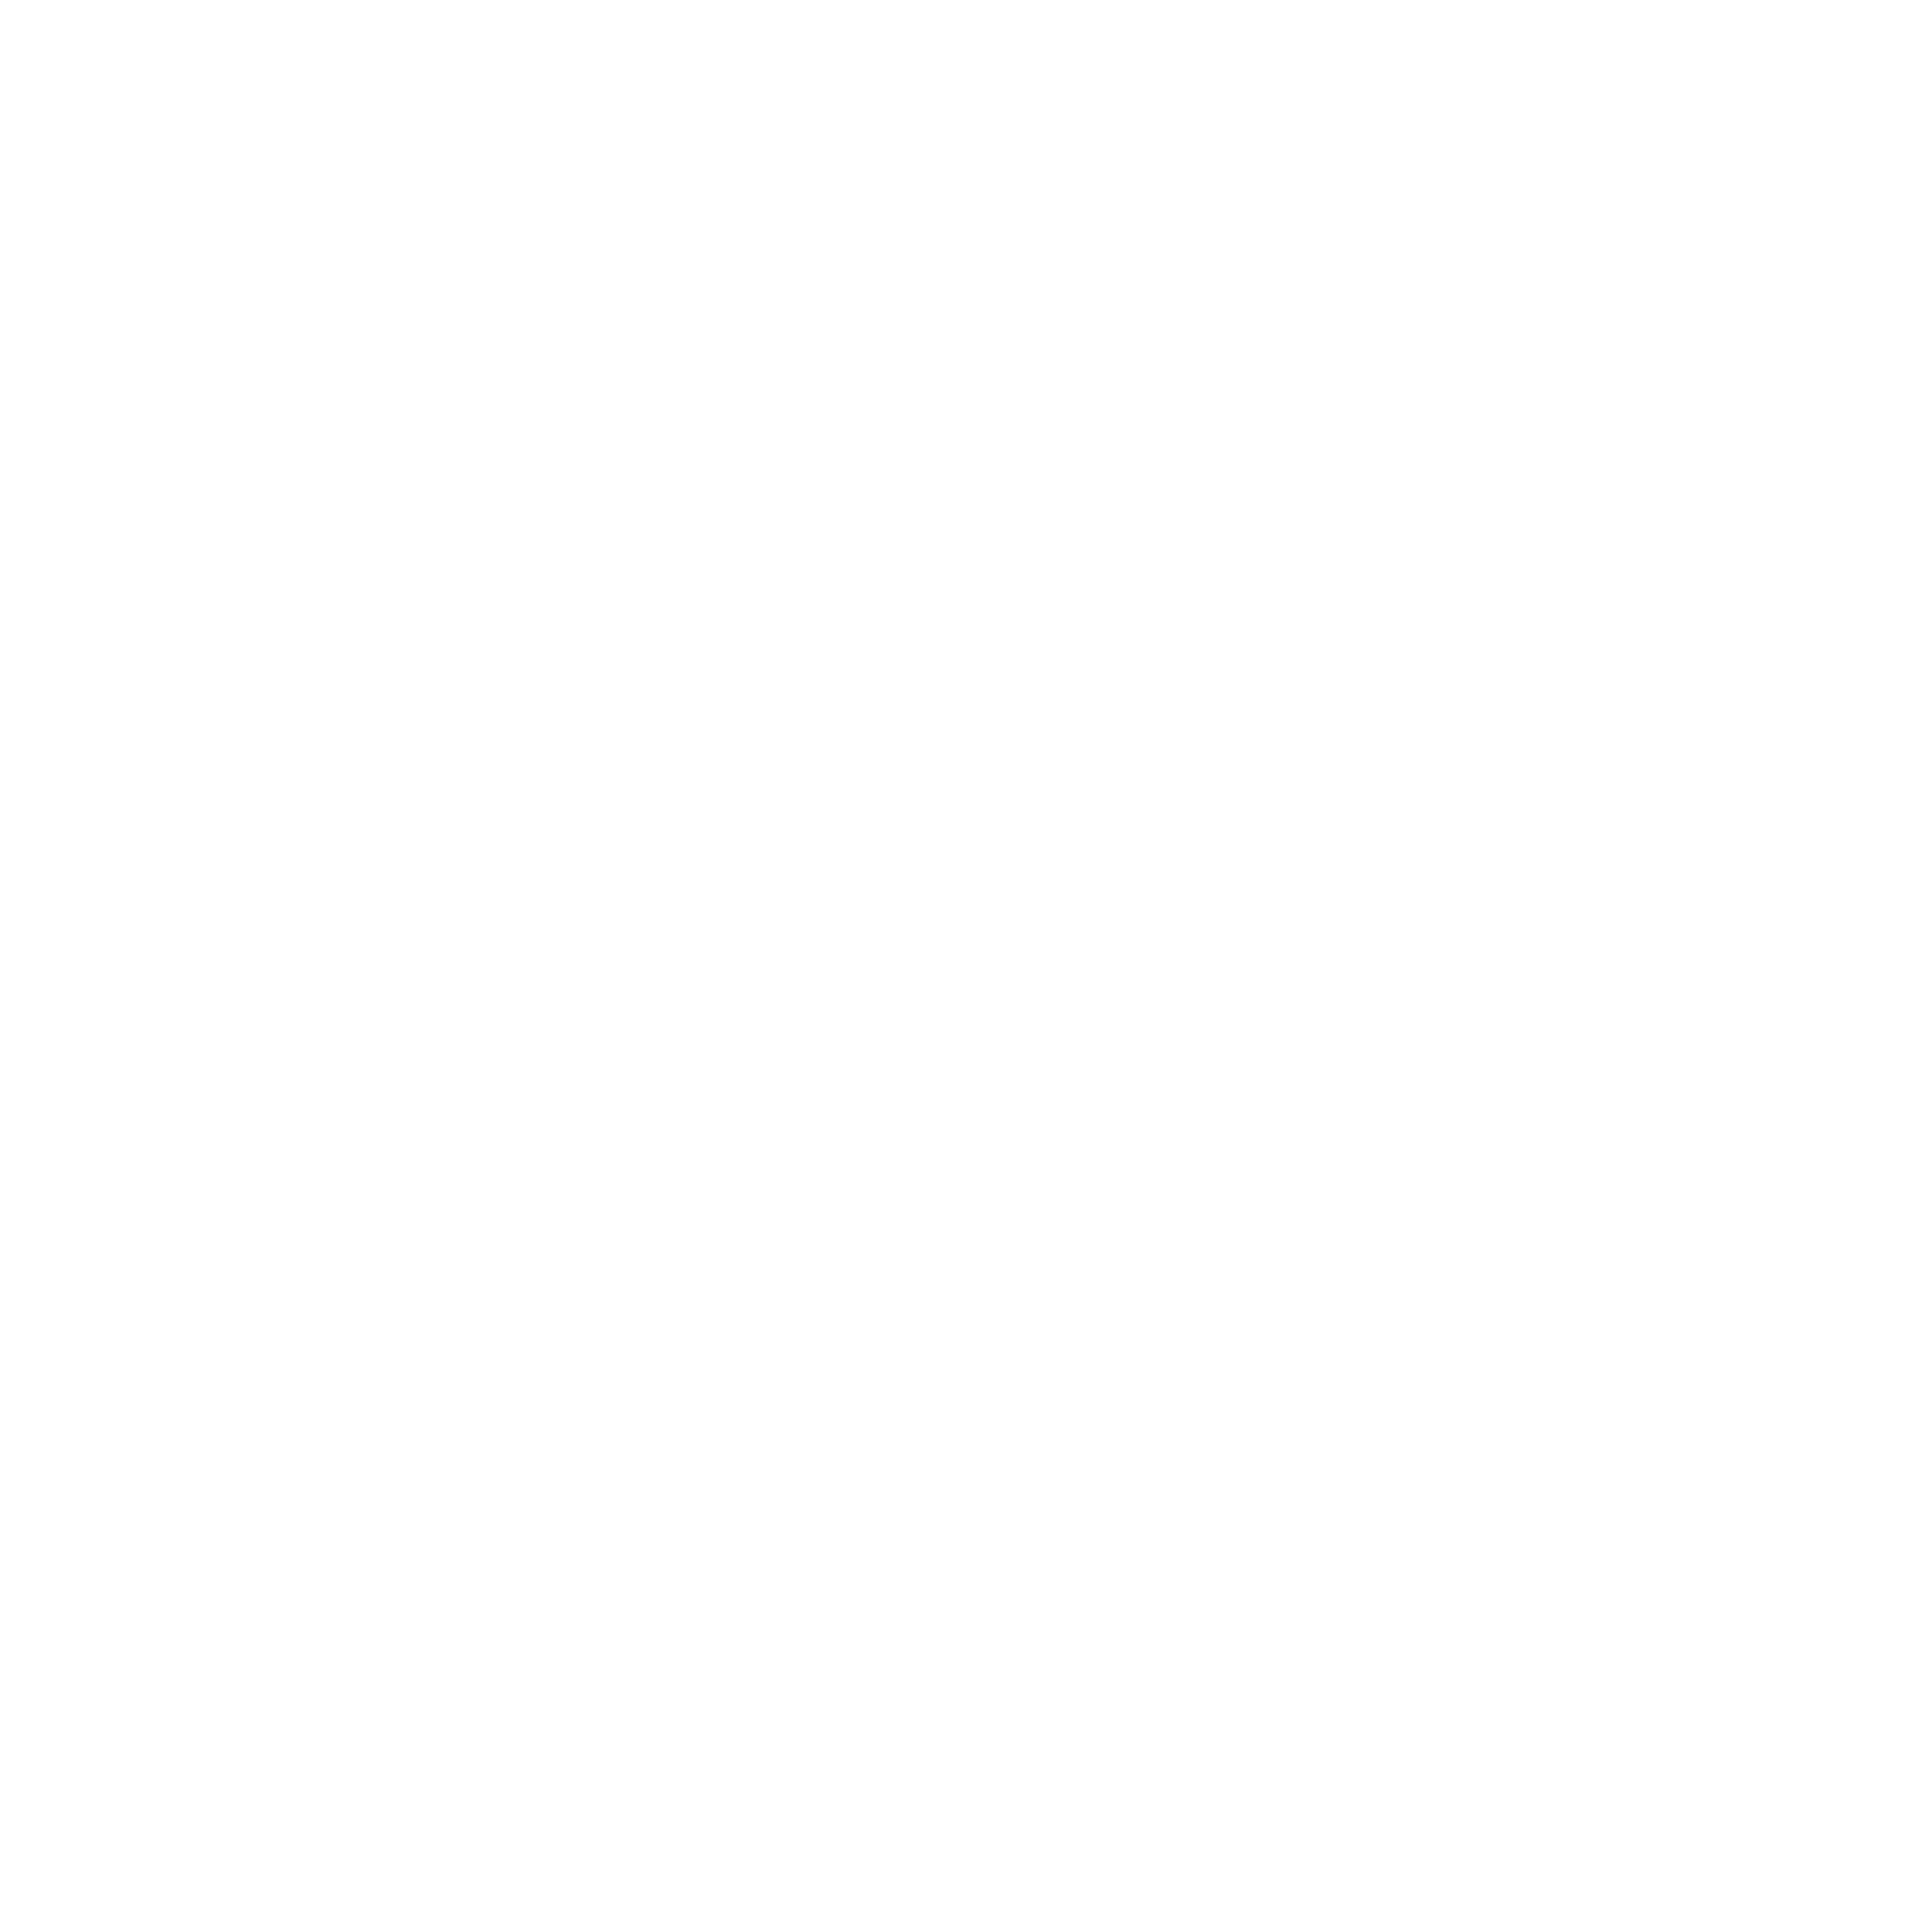 Frys Logo - Fry's Electronics Logo PNG Transparent & SVG Vector - Freebie Supply